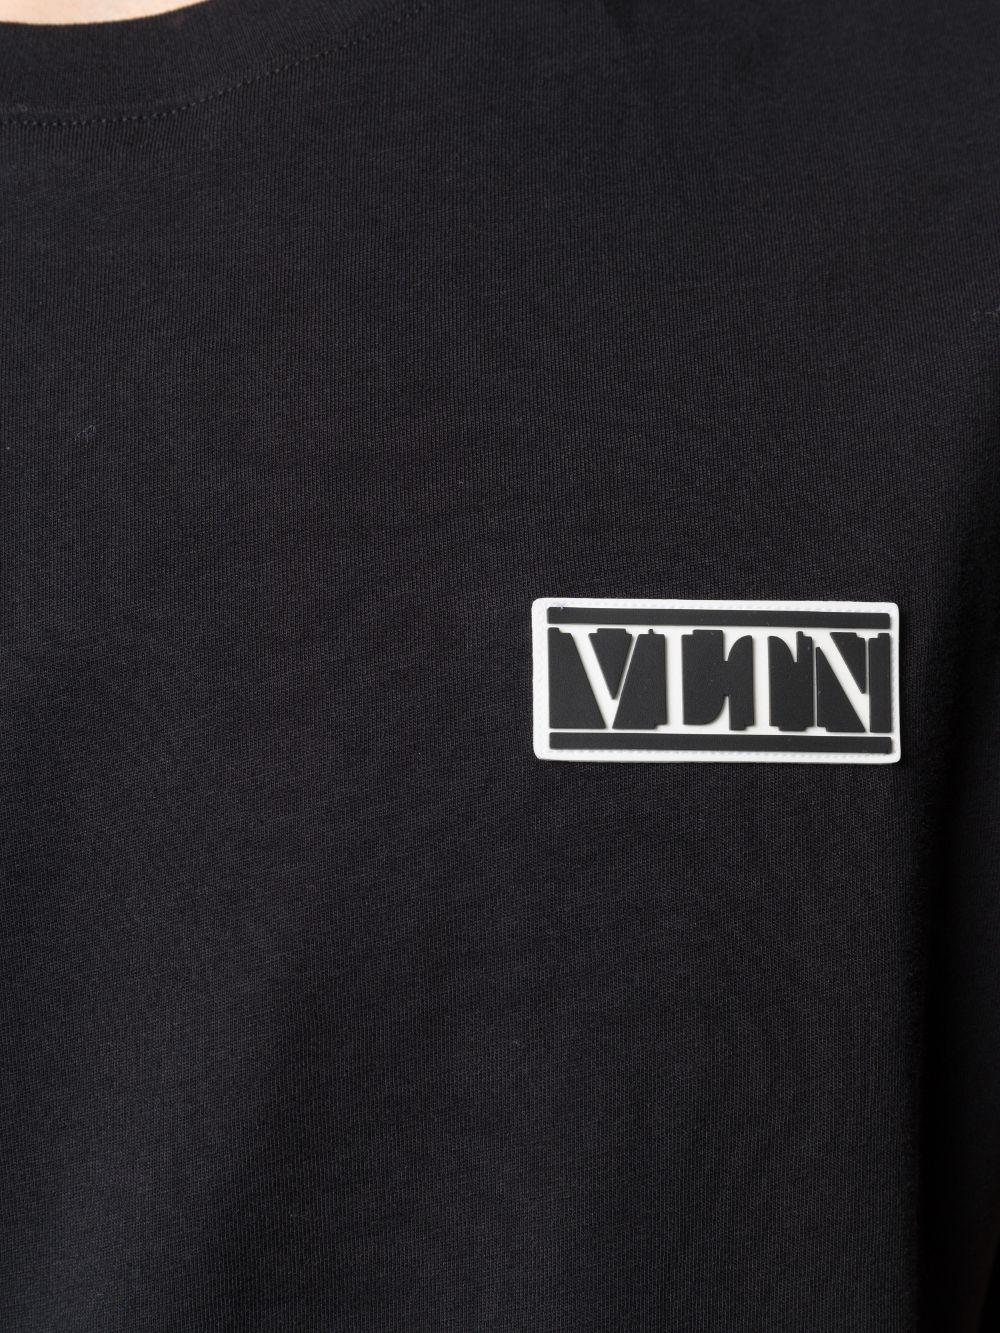 Valentino Cotton Vltn Logo-patch T-shirt in Black for Men - Lyst